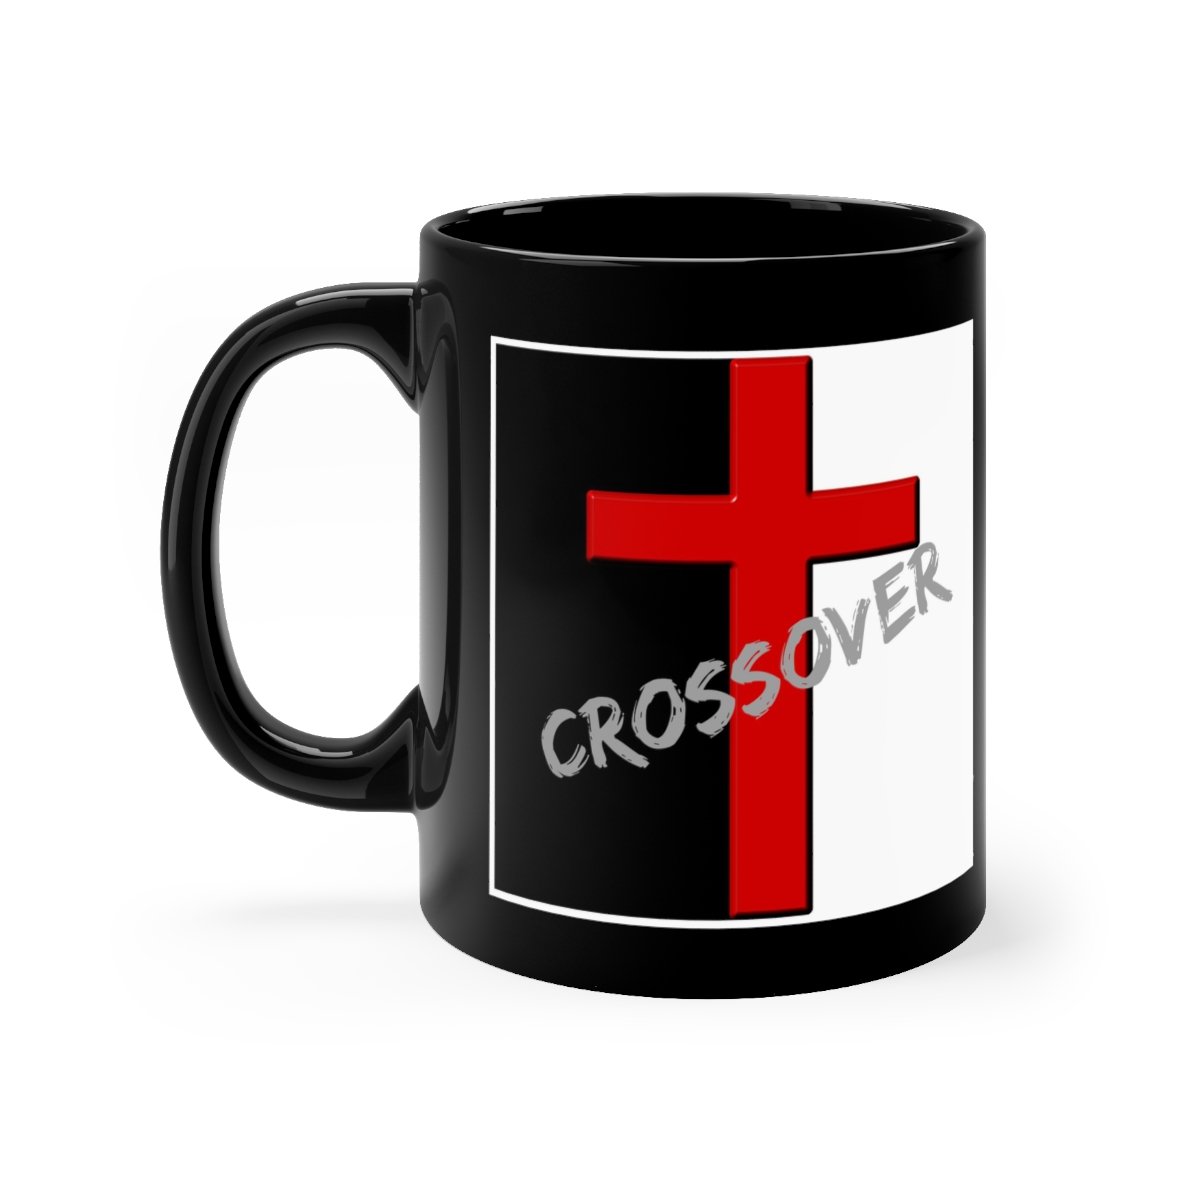 Crossover Black mug 11oz